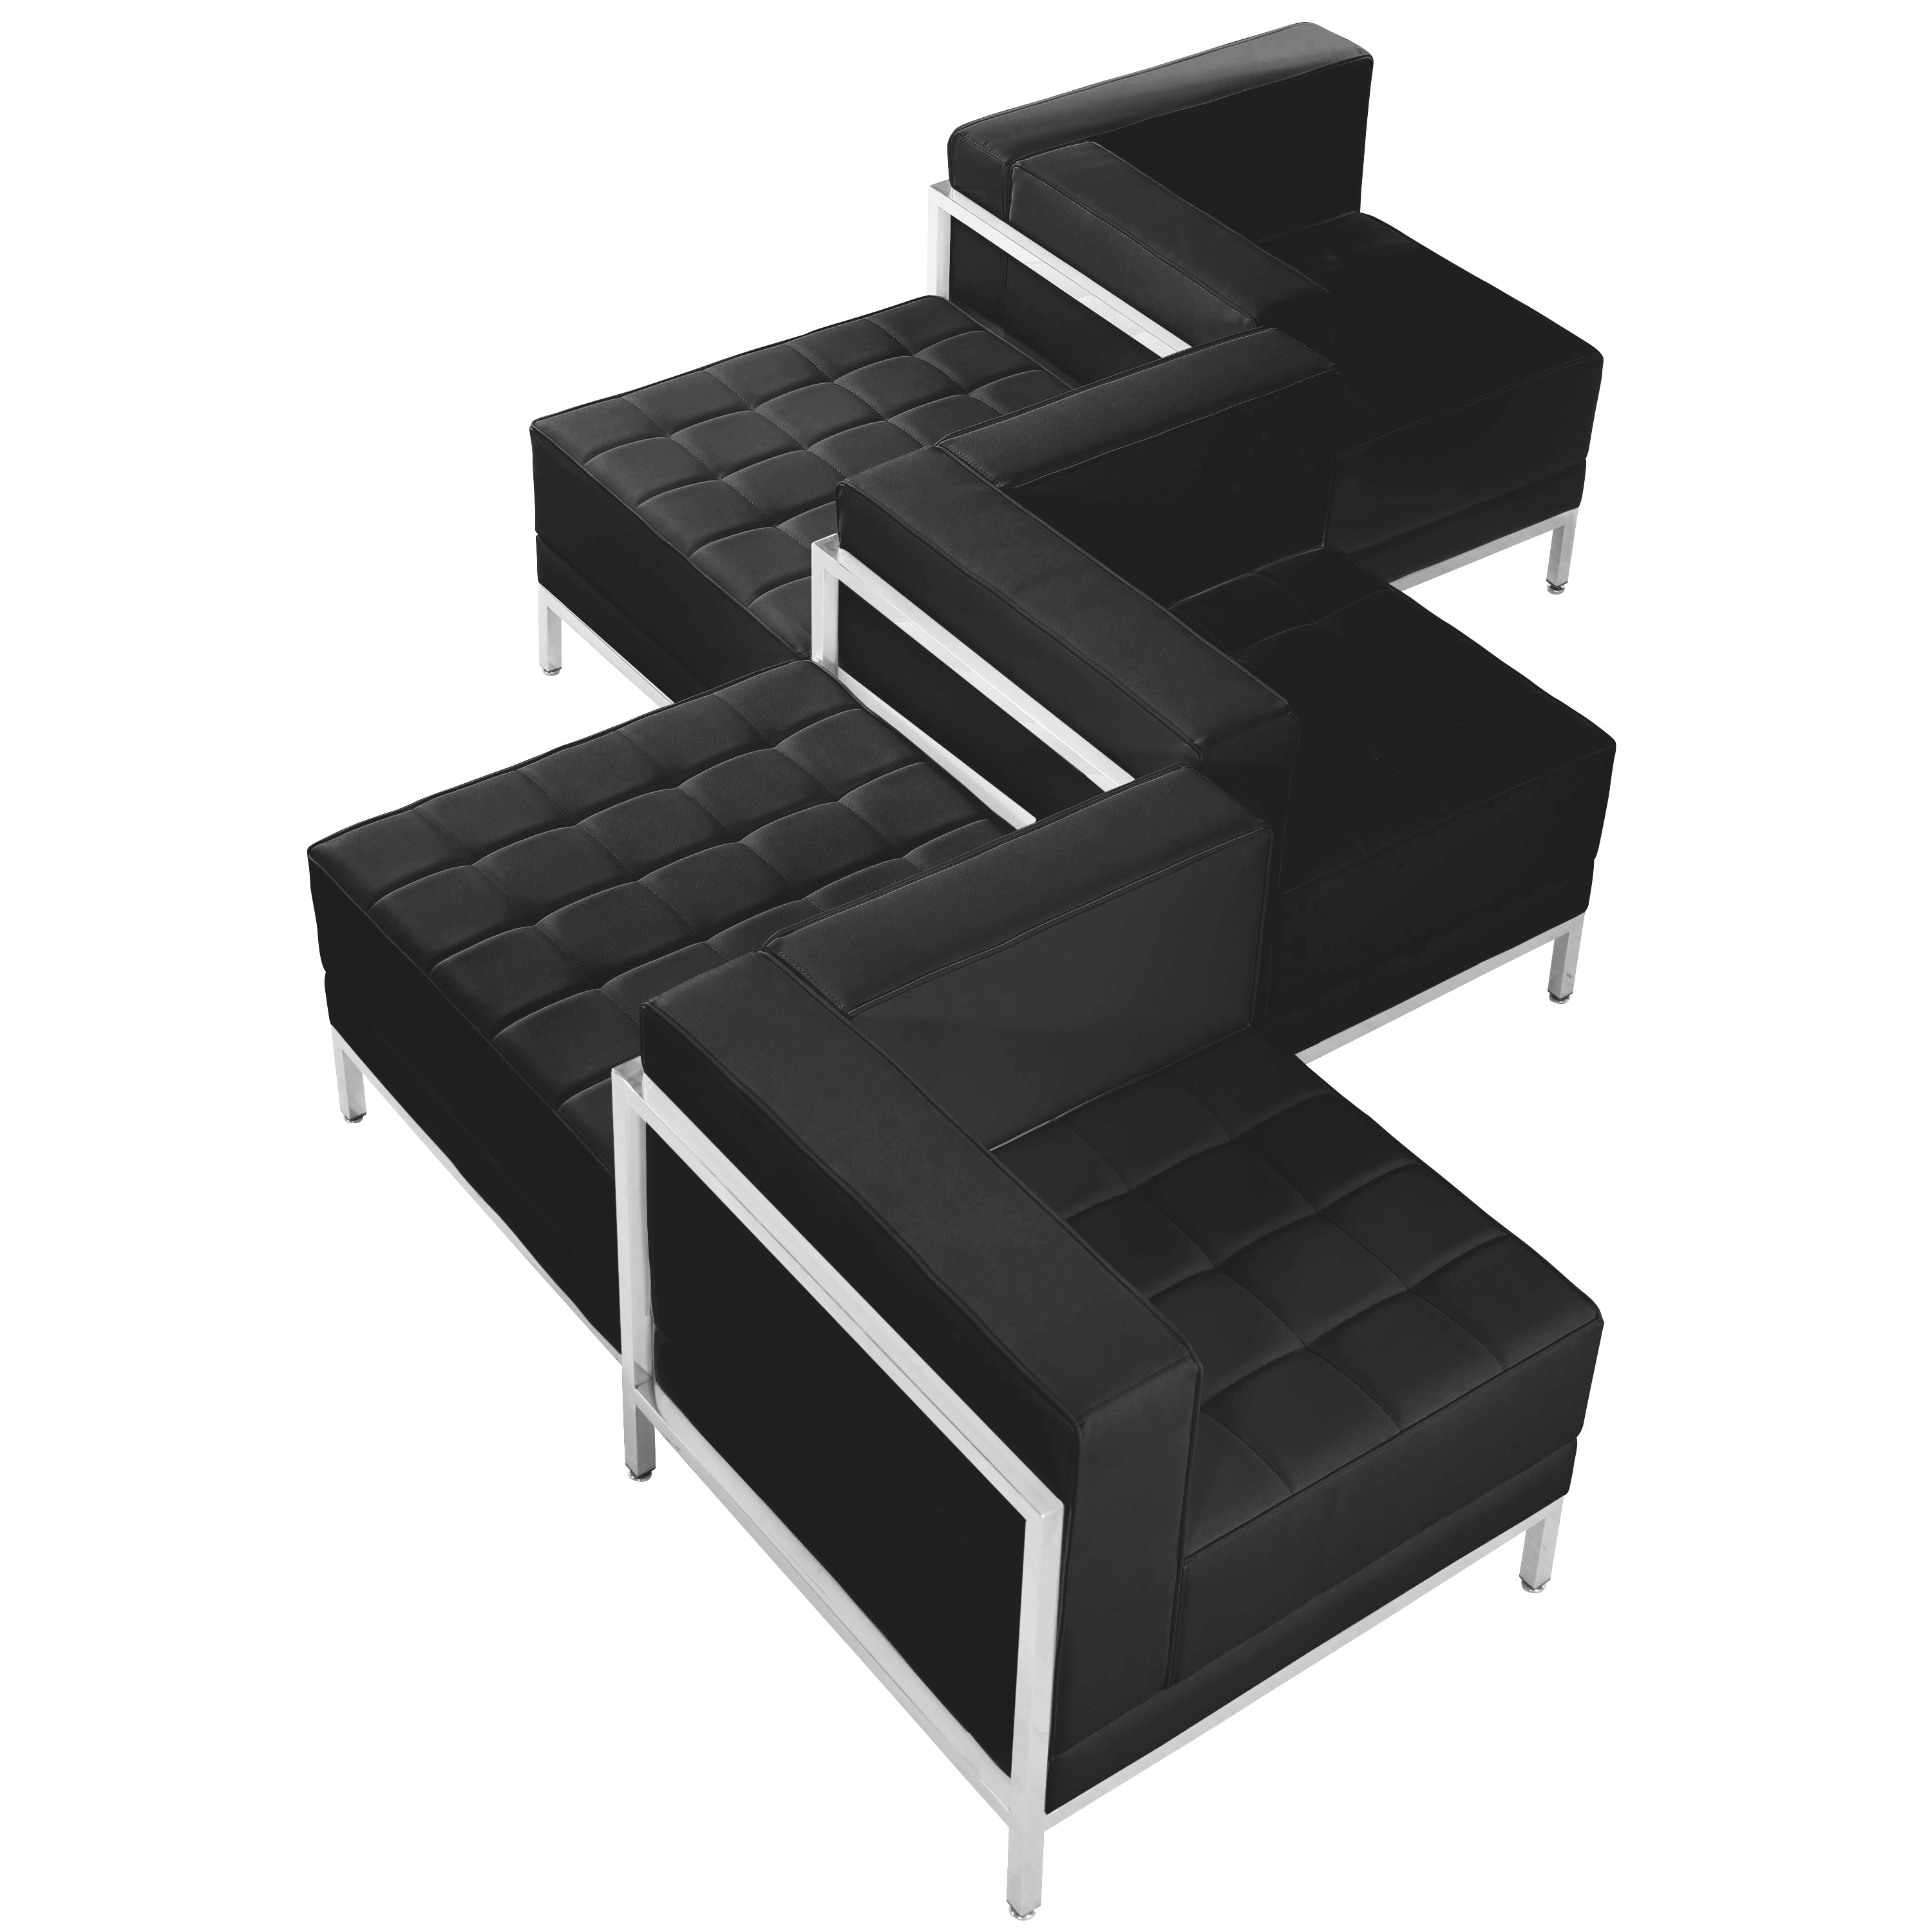 HERCULES Imagination Series LeatherSoft 5 Piece Chair & Ottoman Set-Modular Reception Set-Flash Furniture-Wall2Wall Furnishings